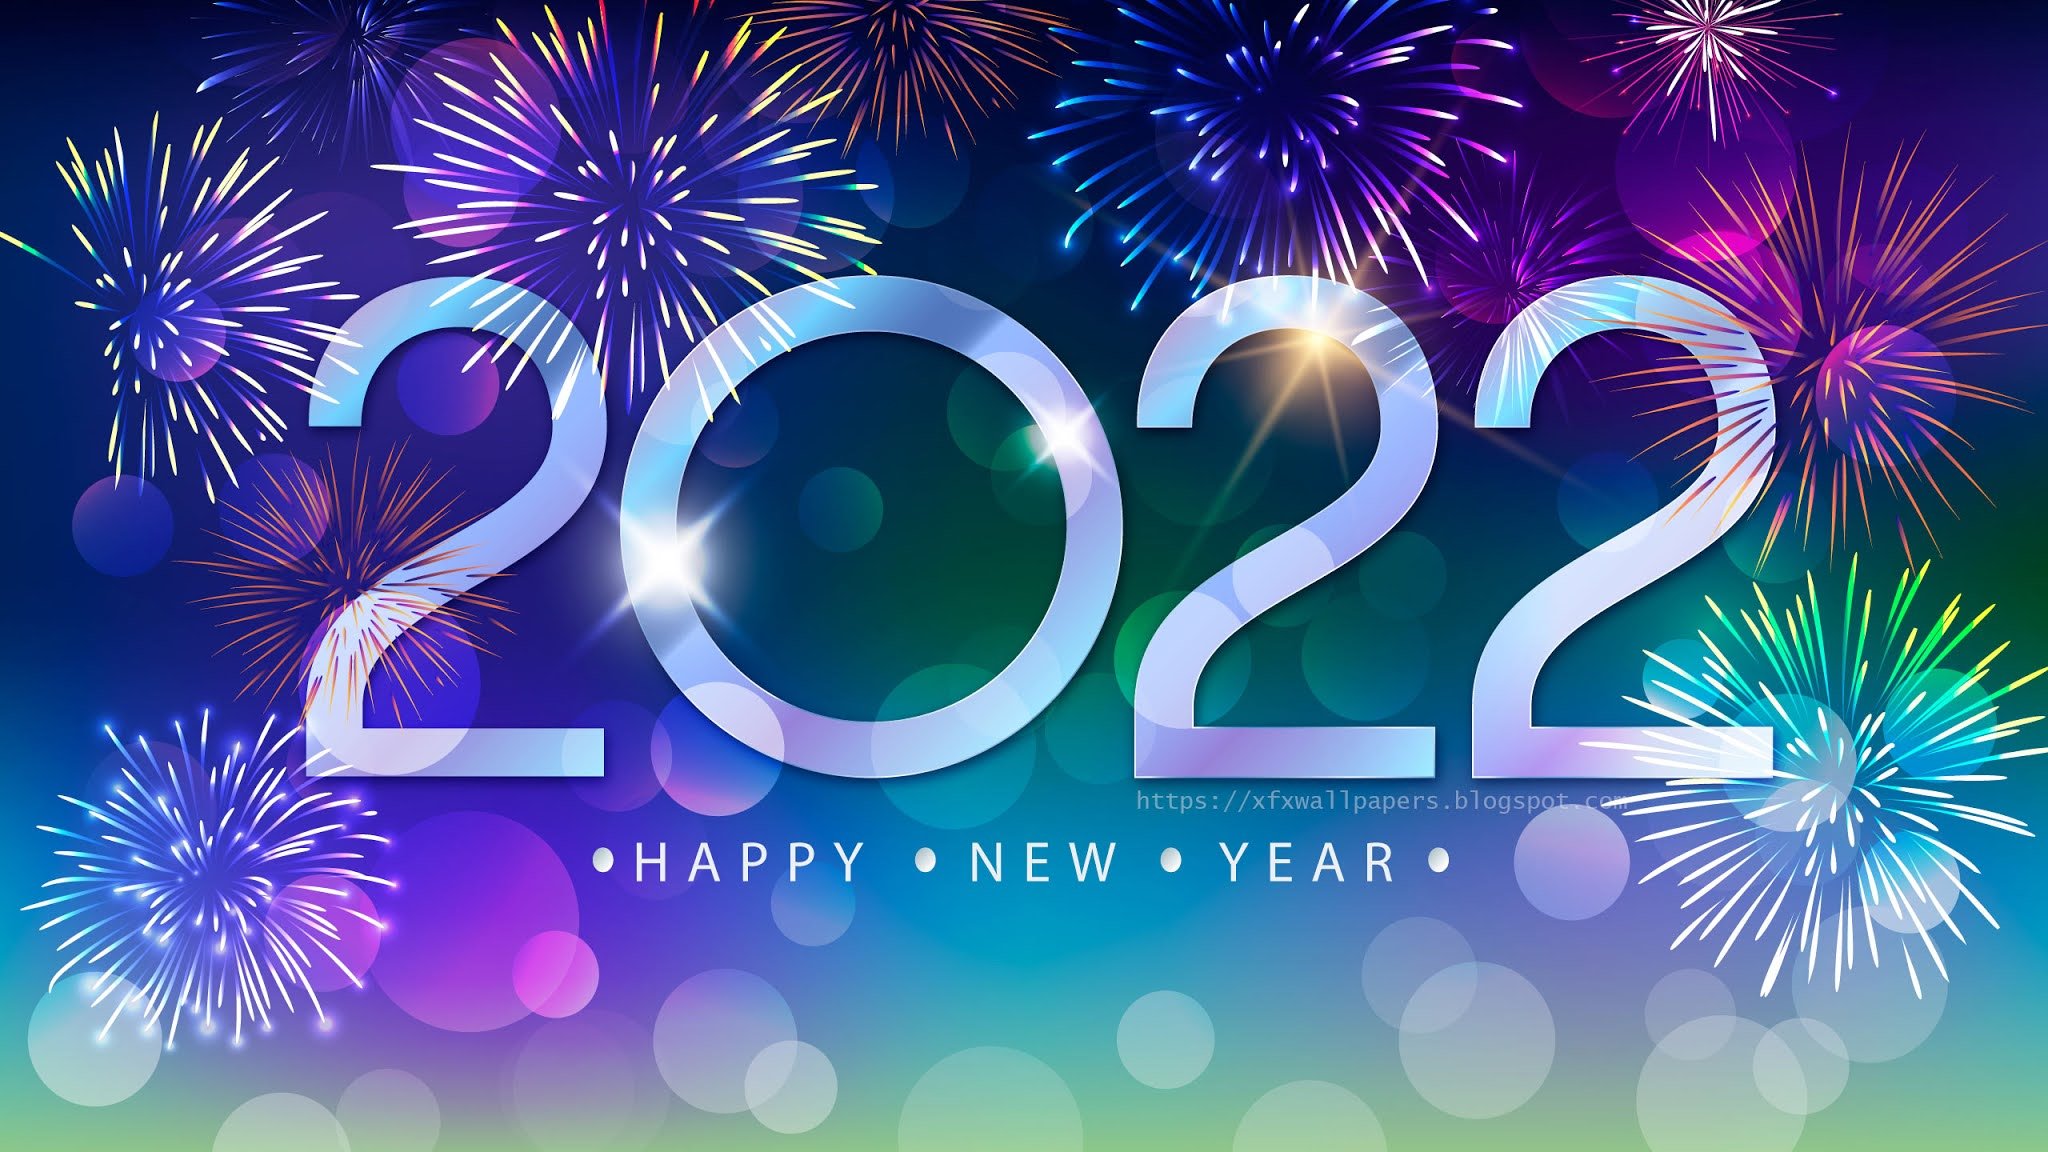 Happy New Year 2022 - 1